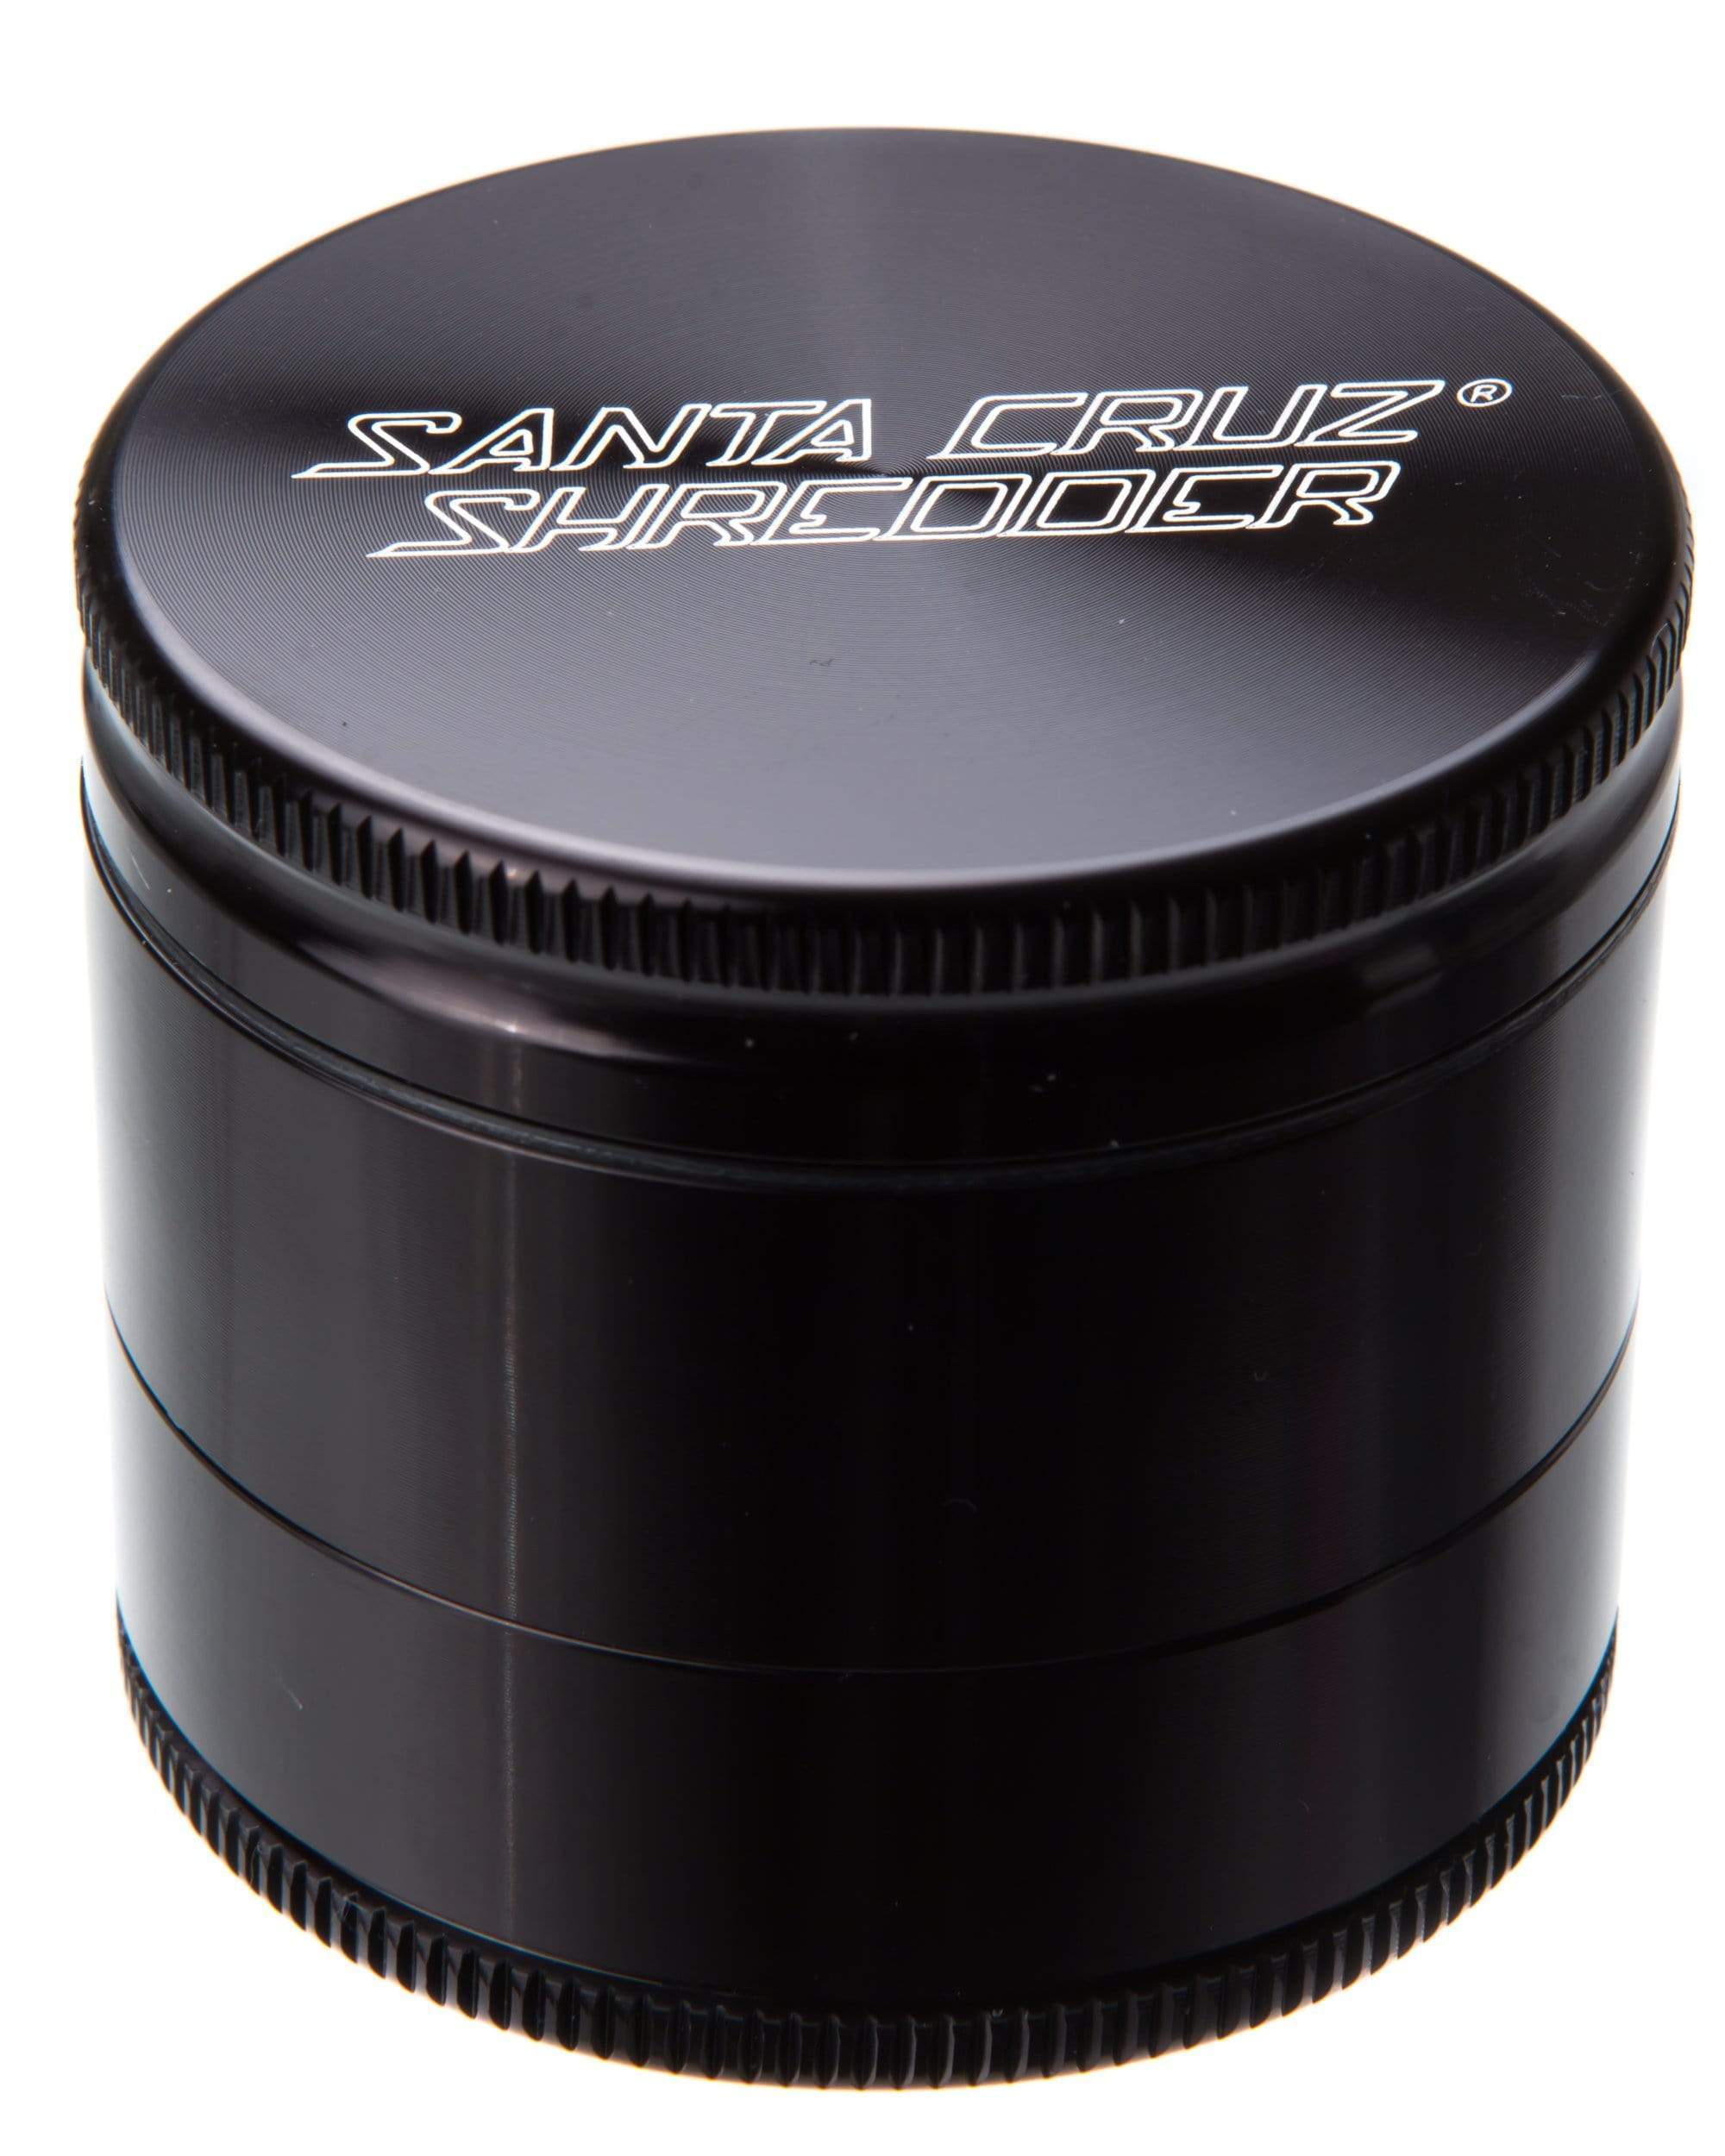 Santa Cruz Shredder Black grinder 373500000000